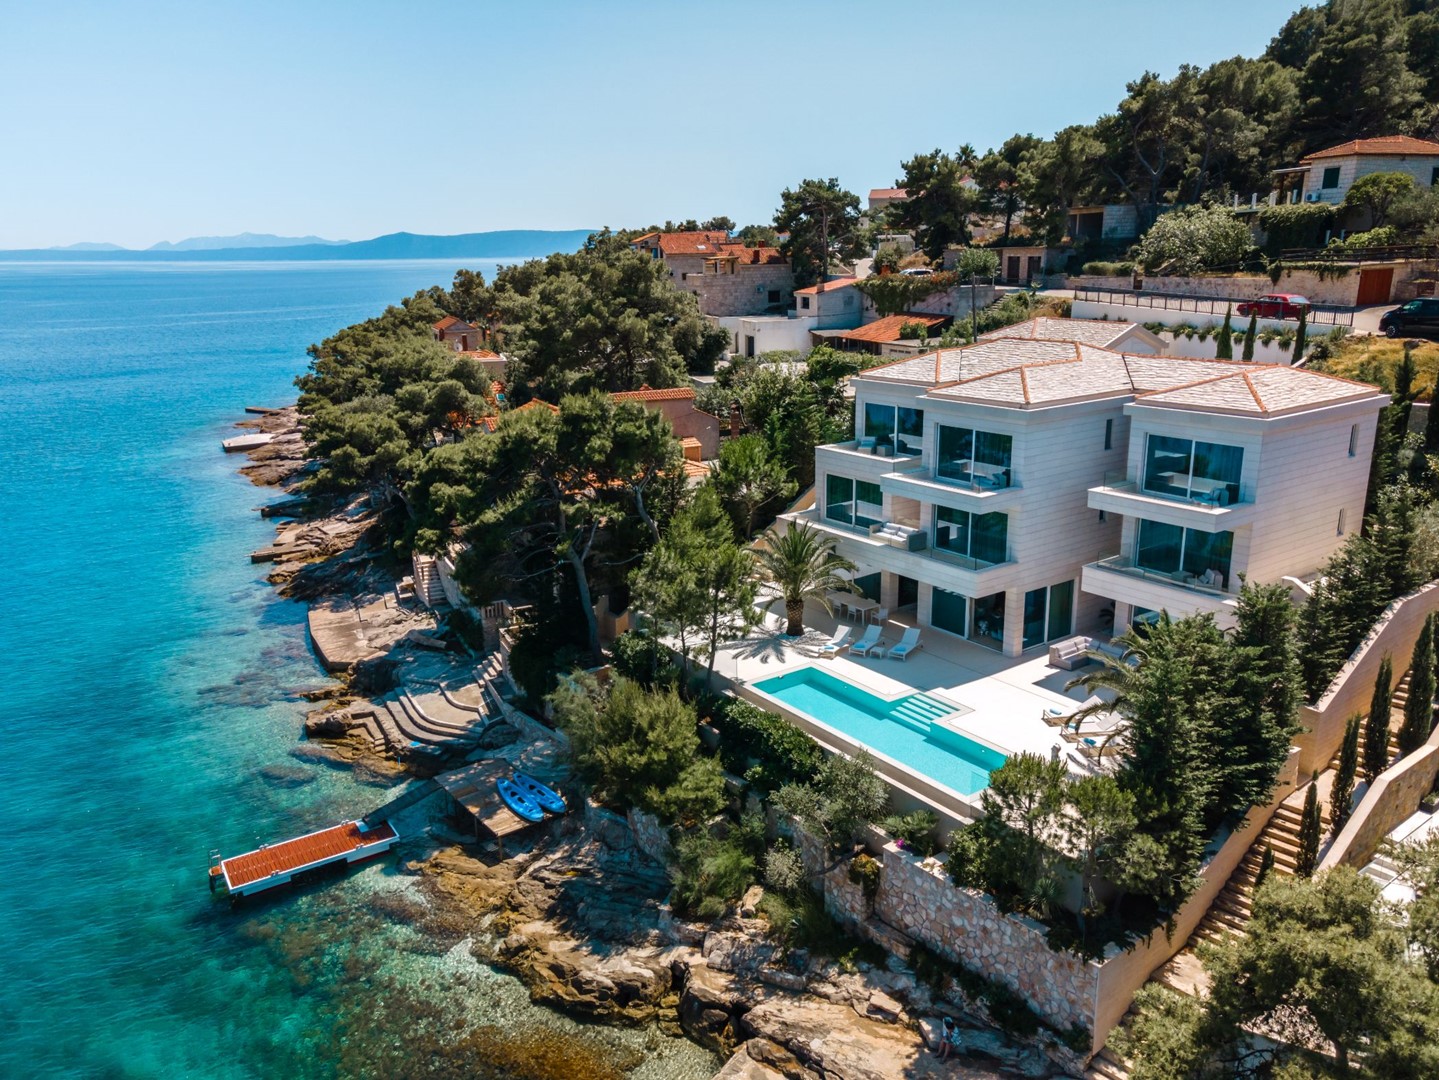 BRAC LUXURY VILLAS - Luxury Villa Murano with the pool, gym and sauna at the beach by the sea on Brac island